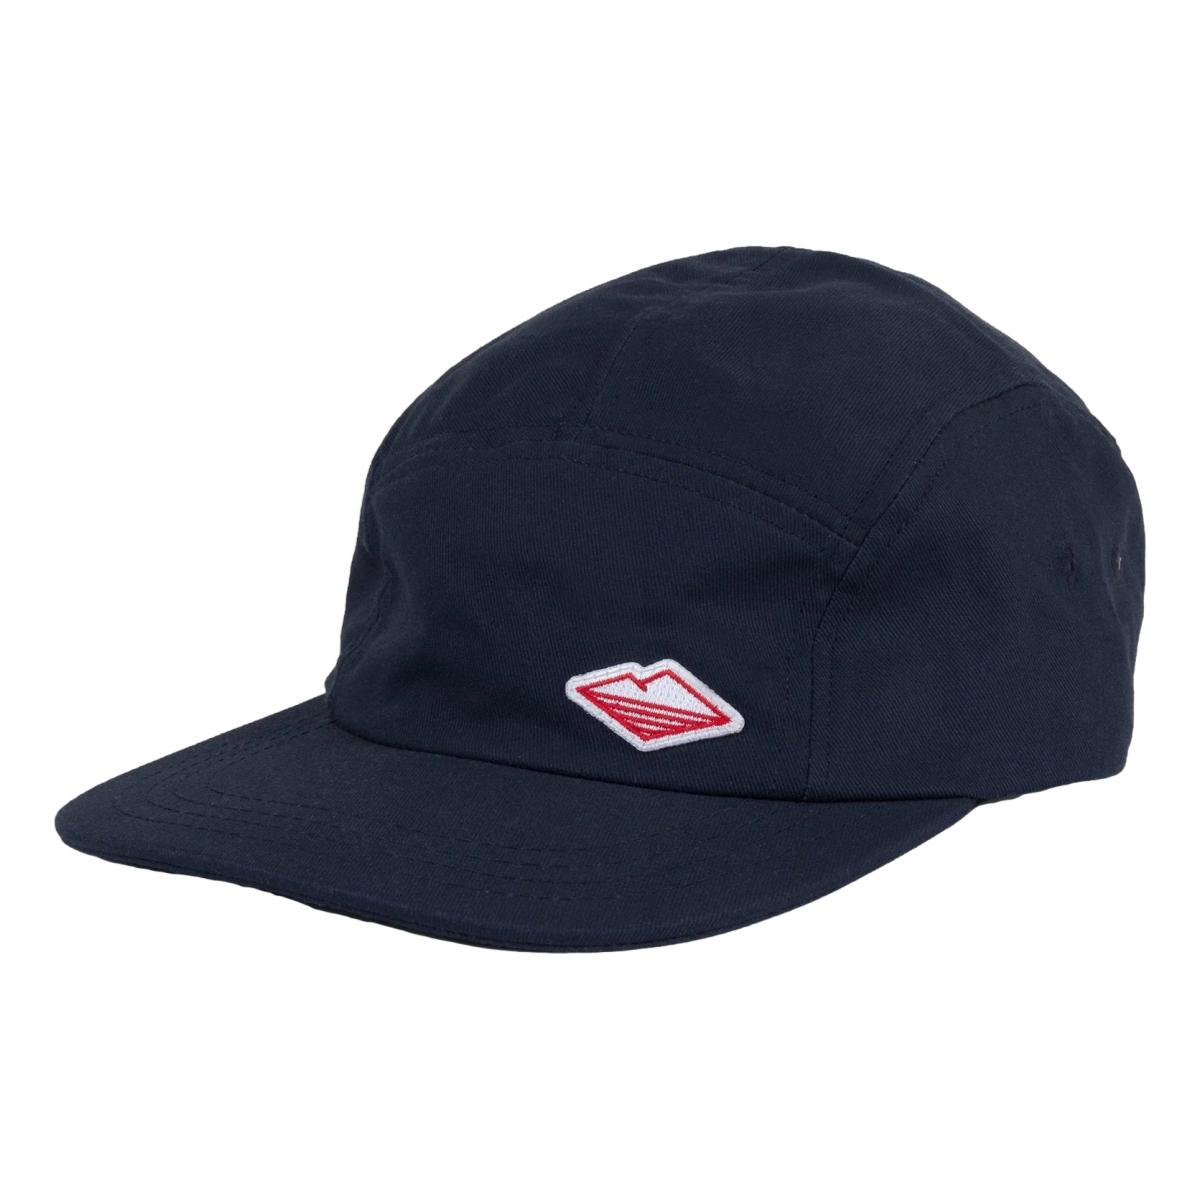 Travel Cap Navy Twill - Hat